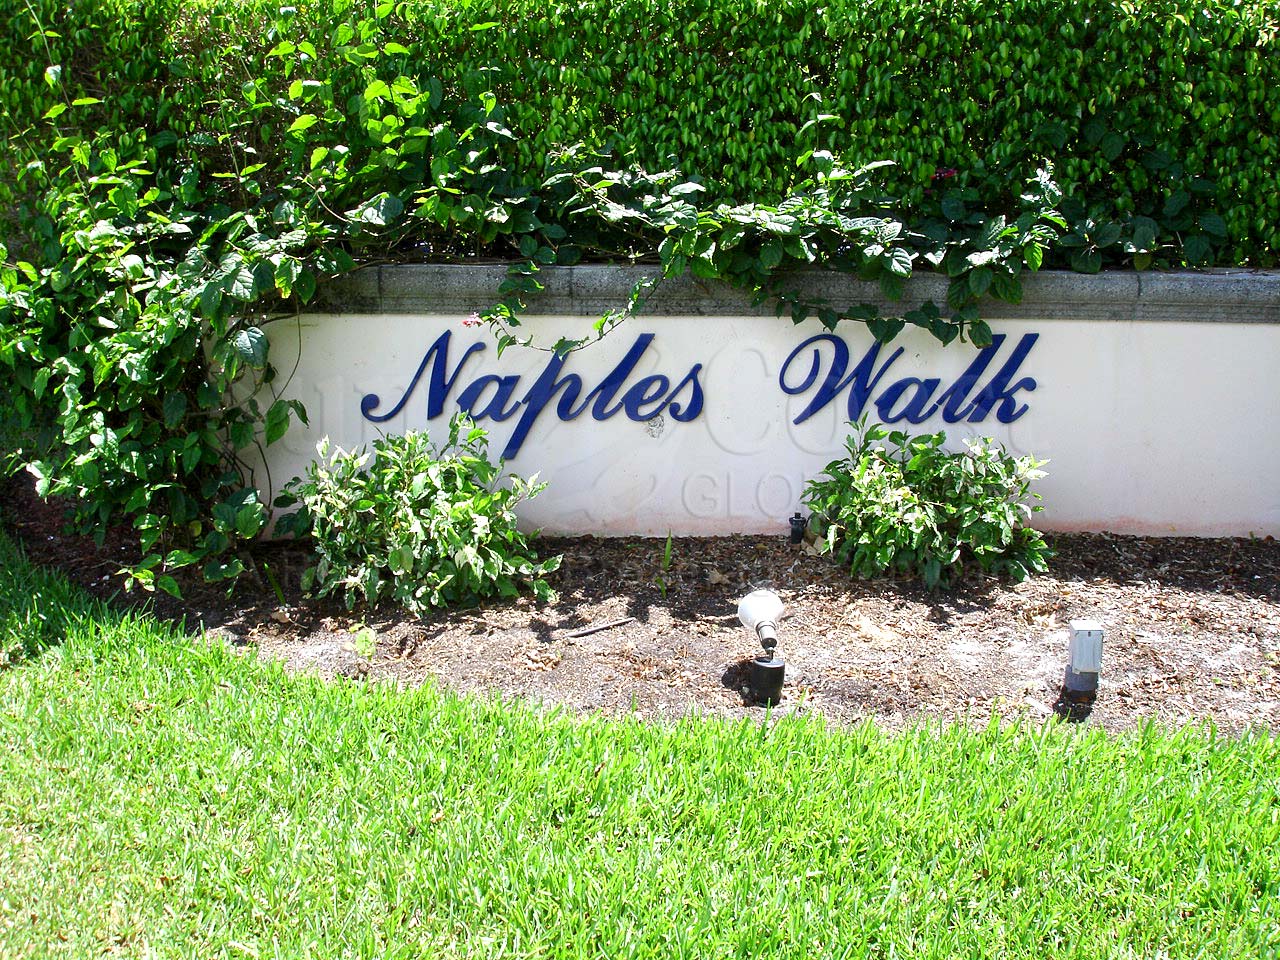 Naples Walk Signage